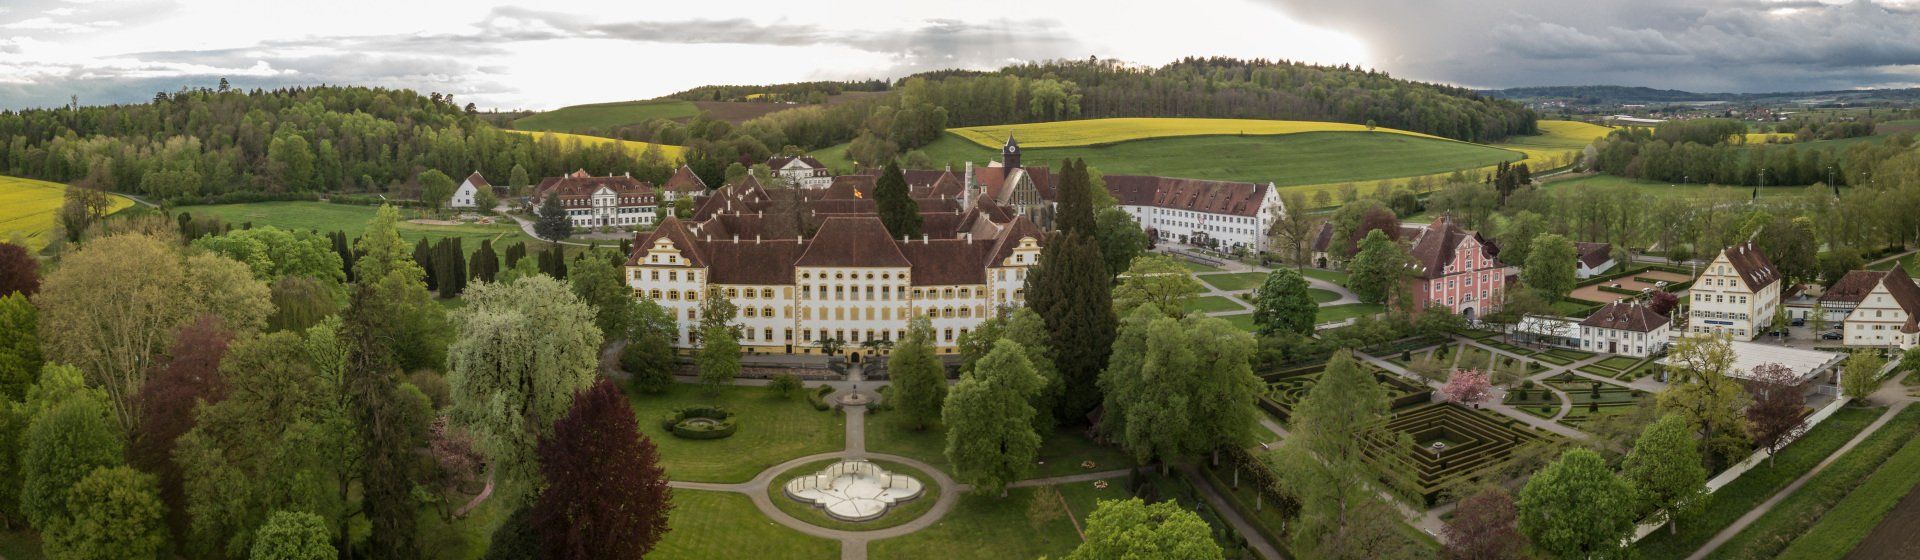 Salemer Schloss mit Park